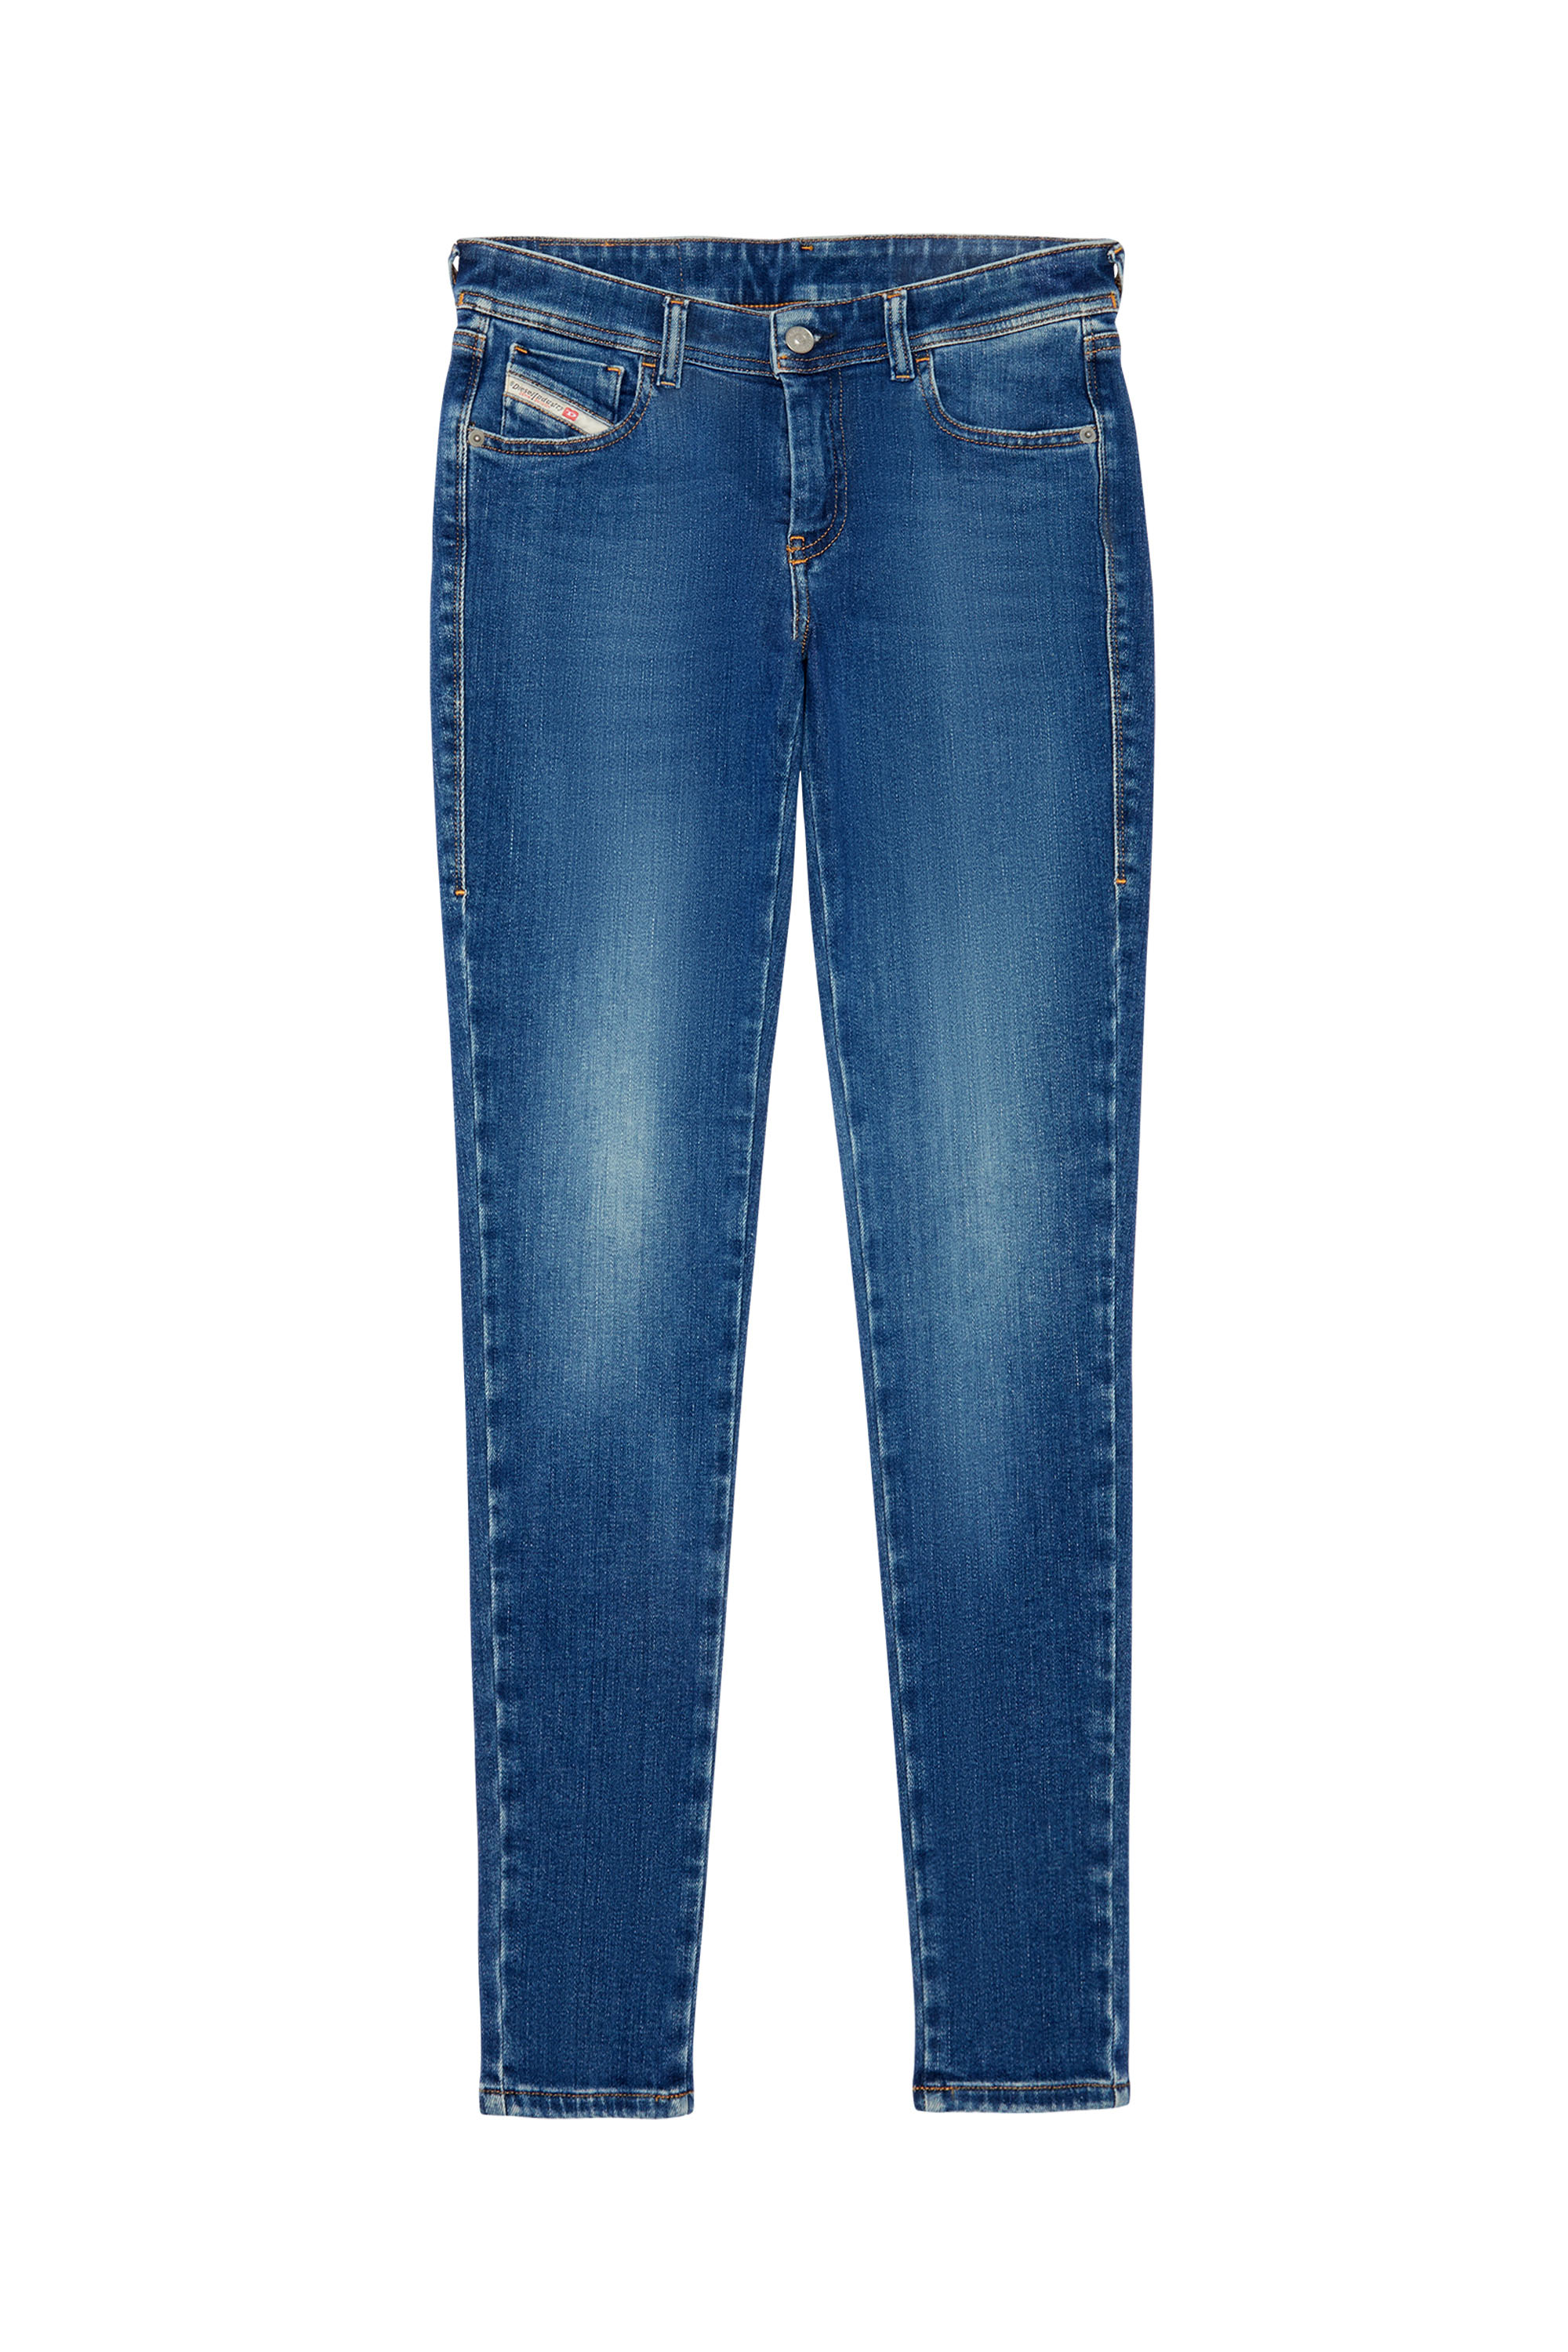 2018 SLANDY-LOW 09C21 Super skinny Jeans, Mittelblau - Jeans